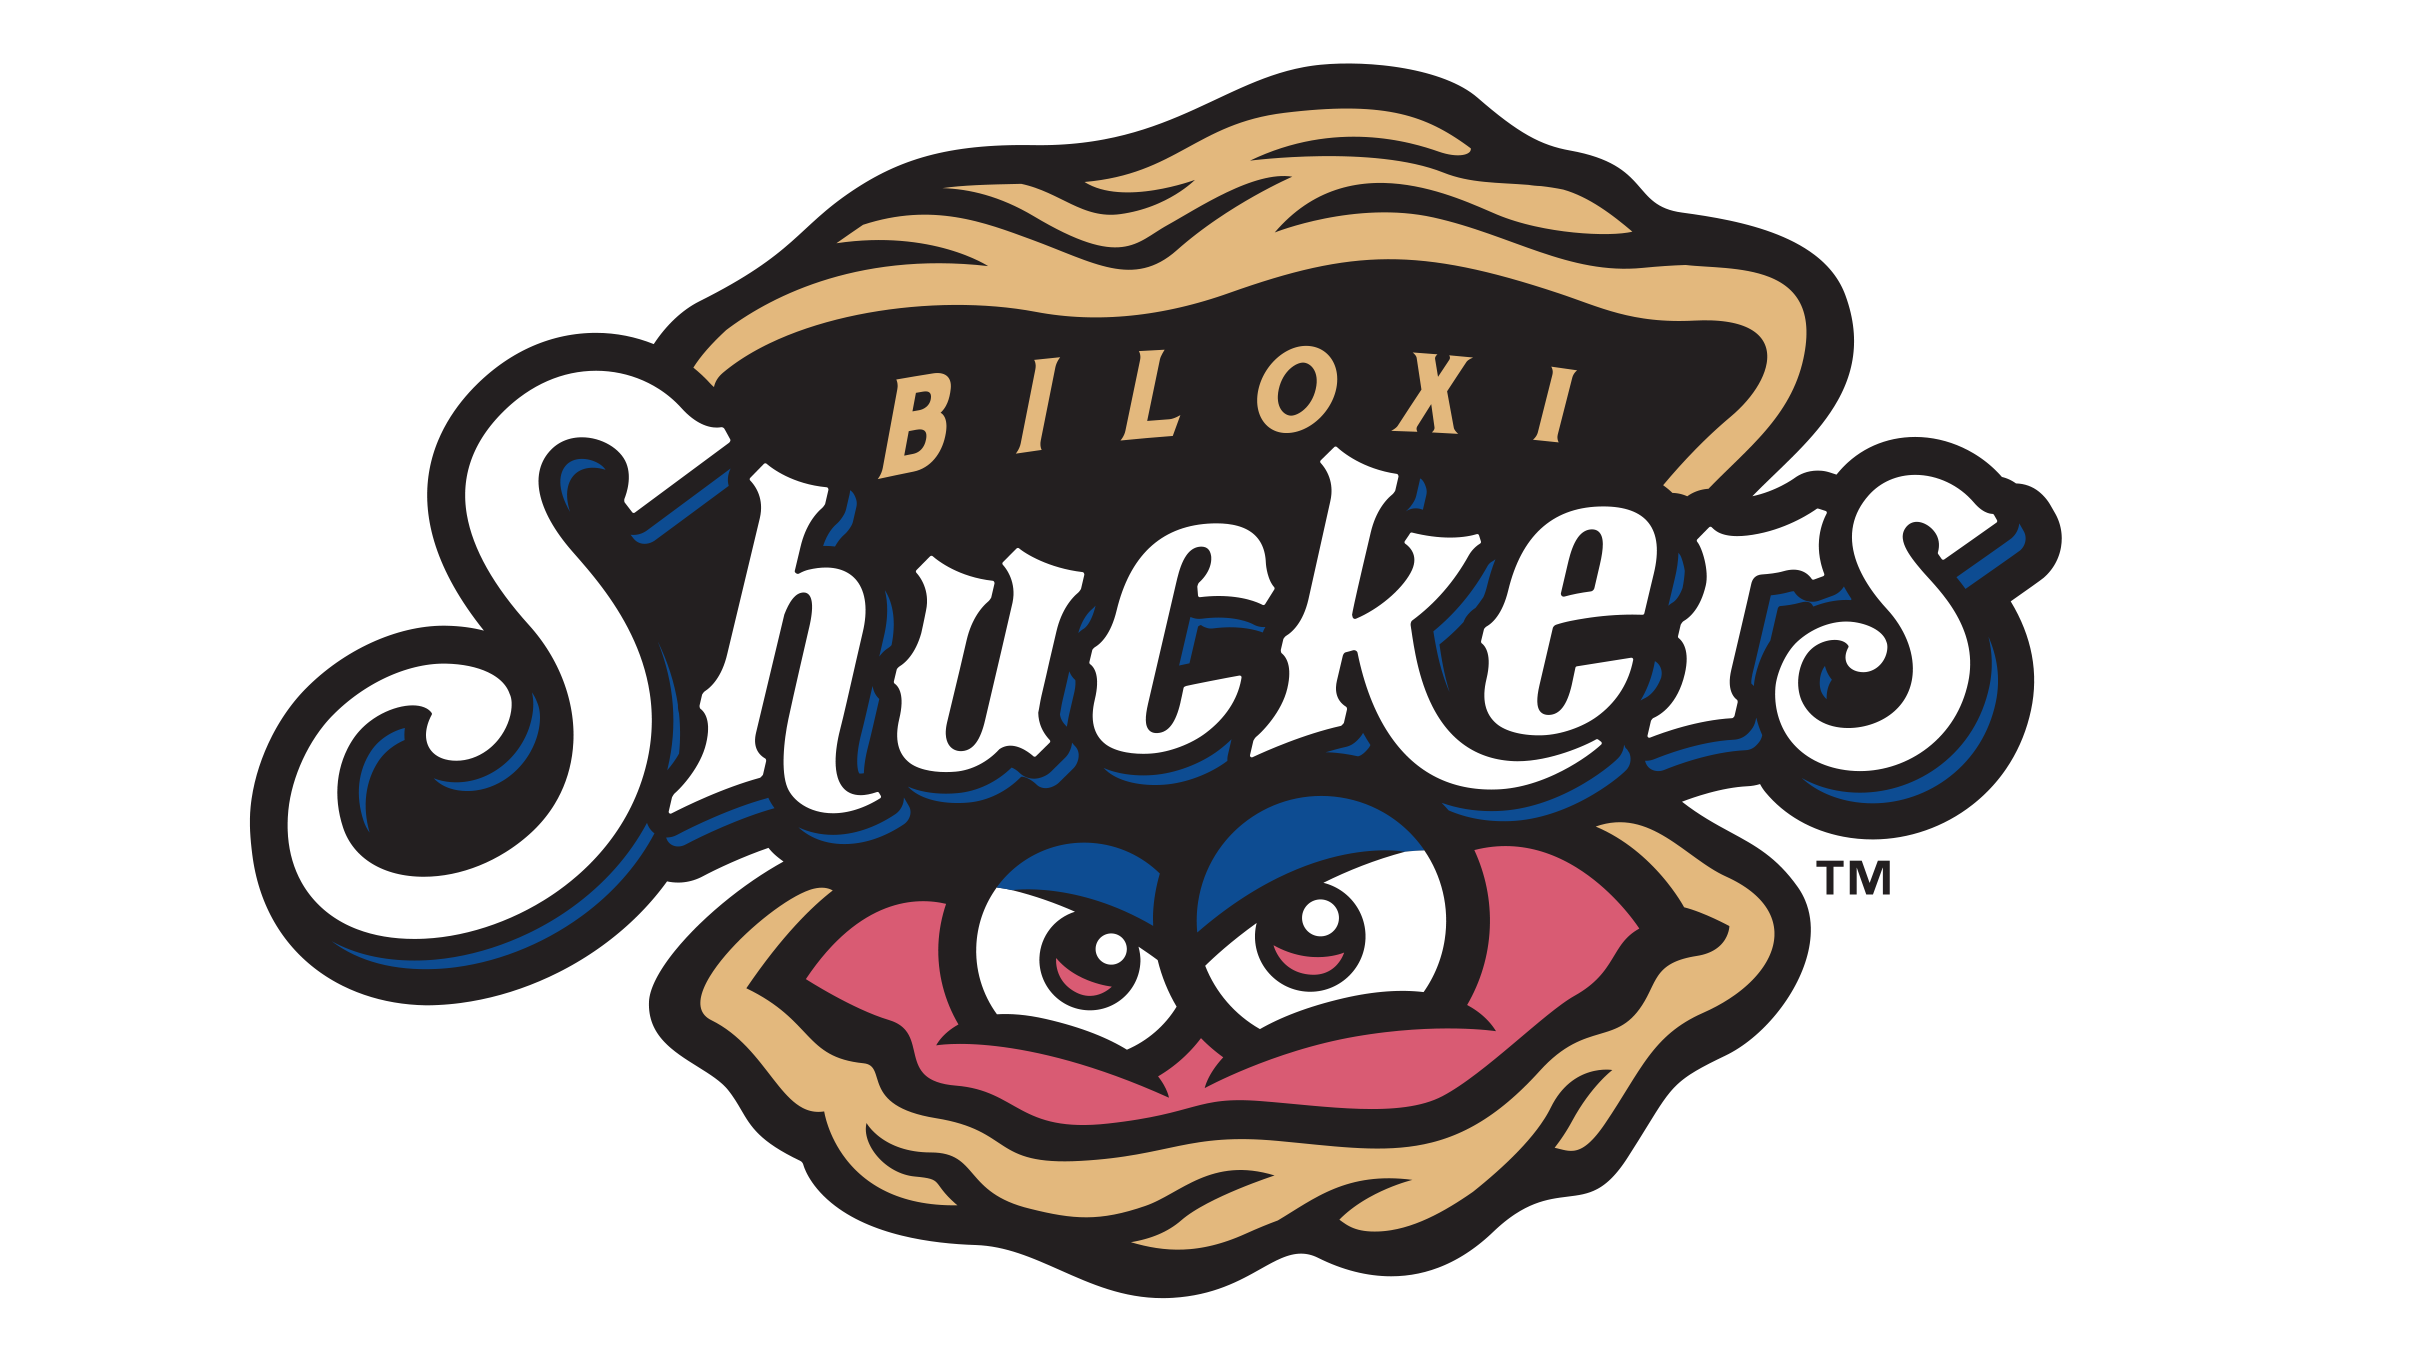 Biloxi Shuckers vs. Tennessee Smokies at MGM Park